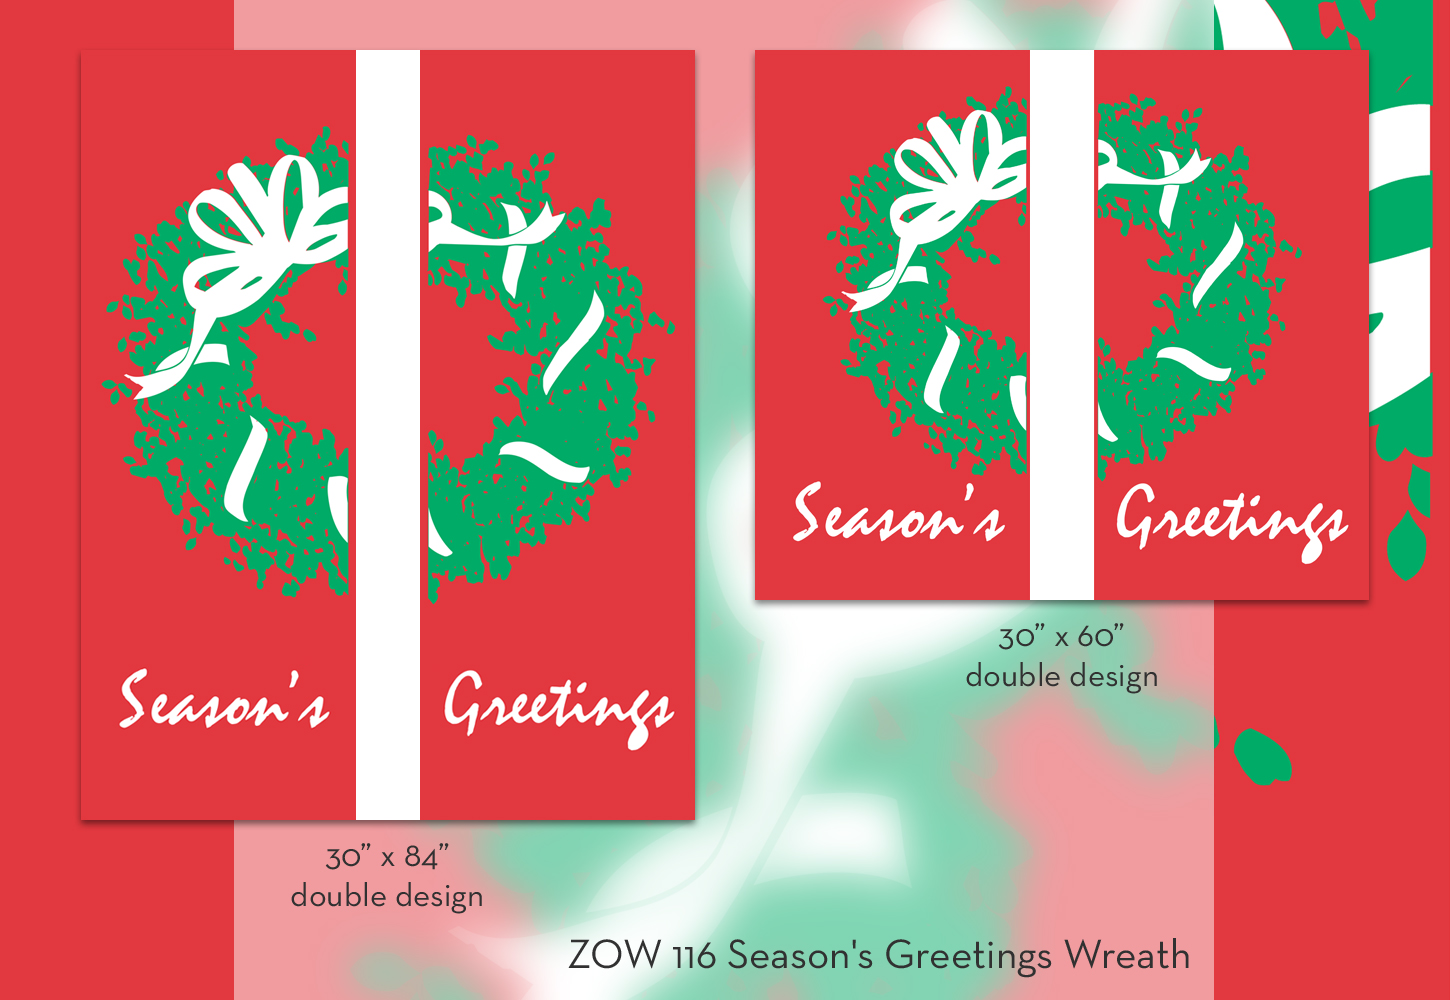 ZOW 116 Season's Greetings Wreath